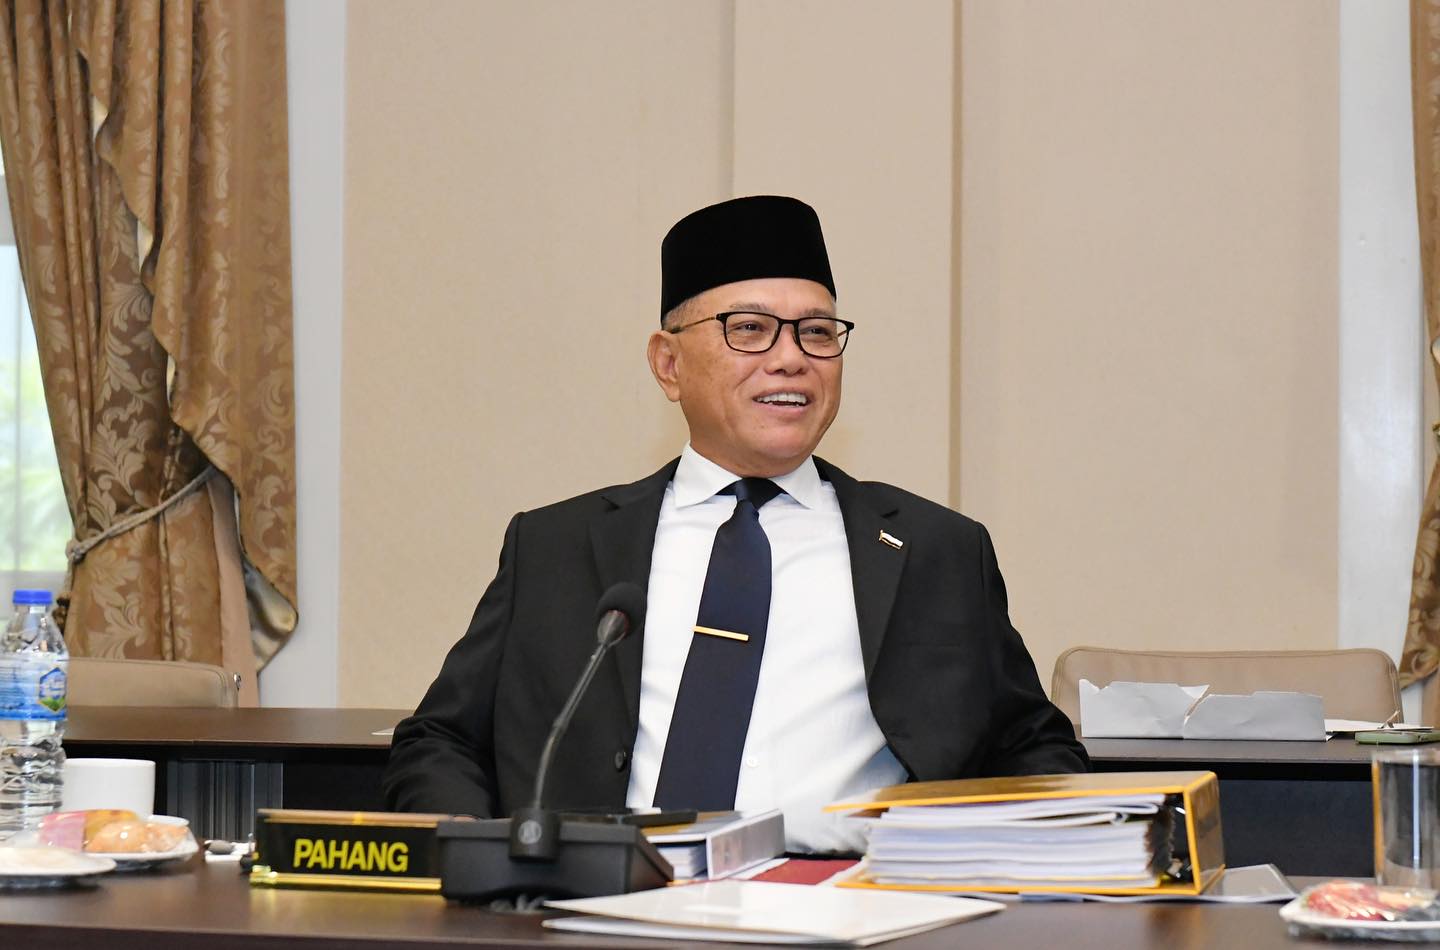 Pahang civil servants to end work at 12.30pm on Fridays during Ramadan: MB